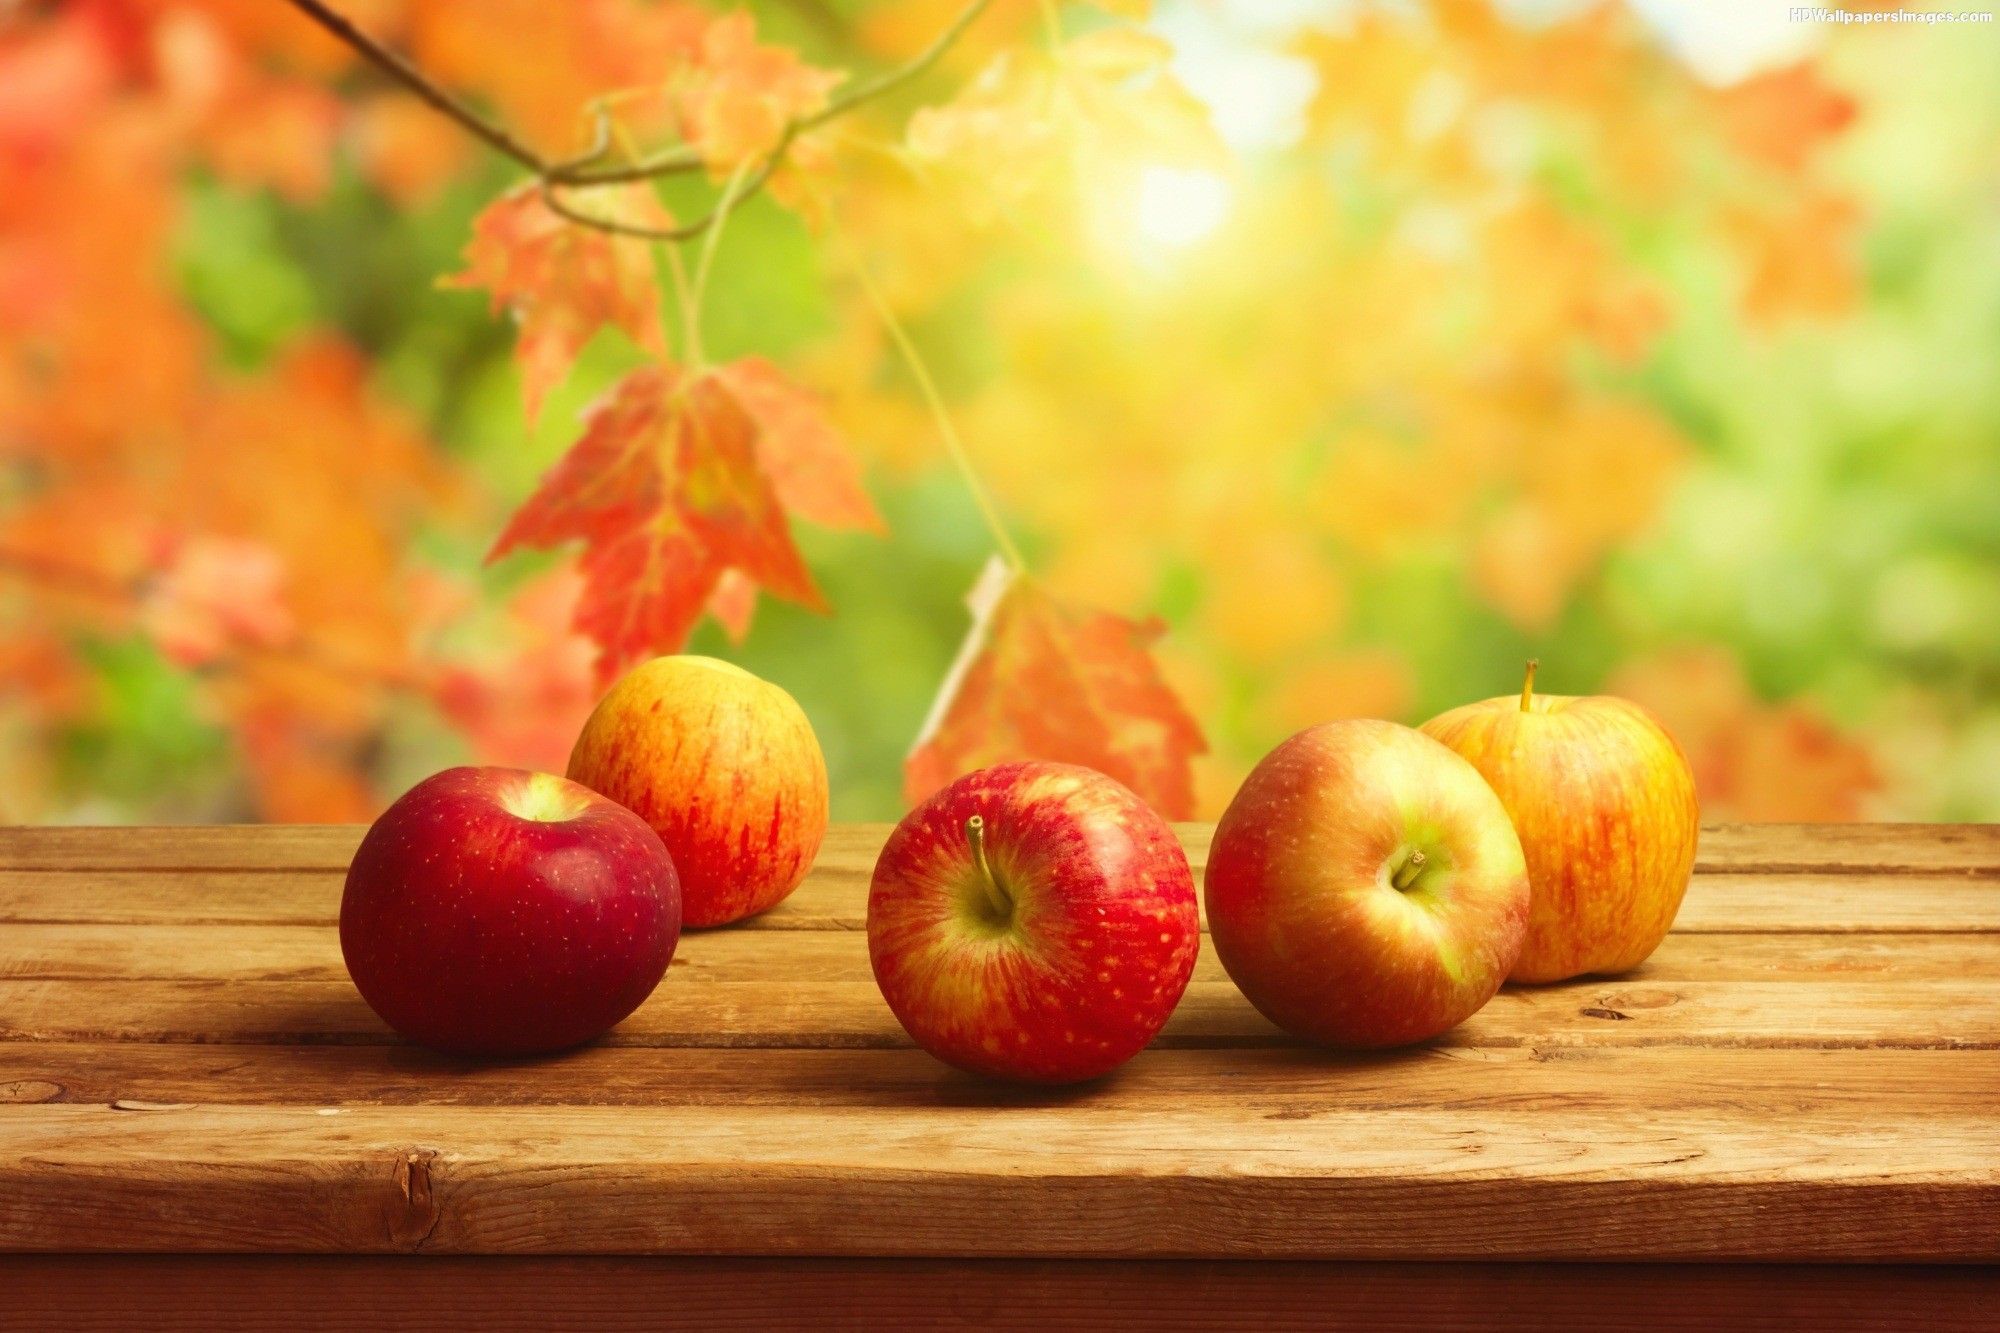 Fall Apples HD Image. Fall apples, Fruit wallpaper, Apple fruit